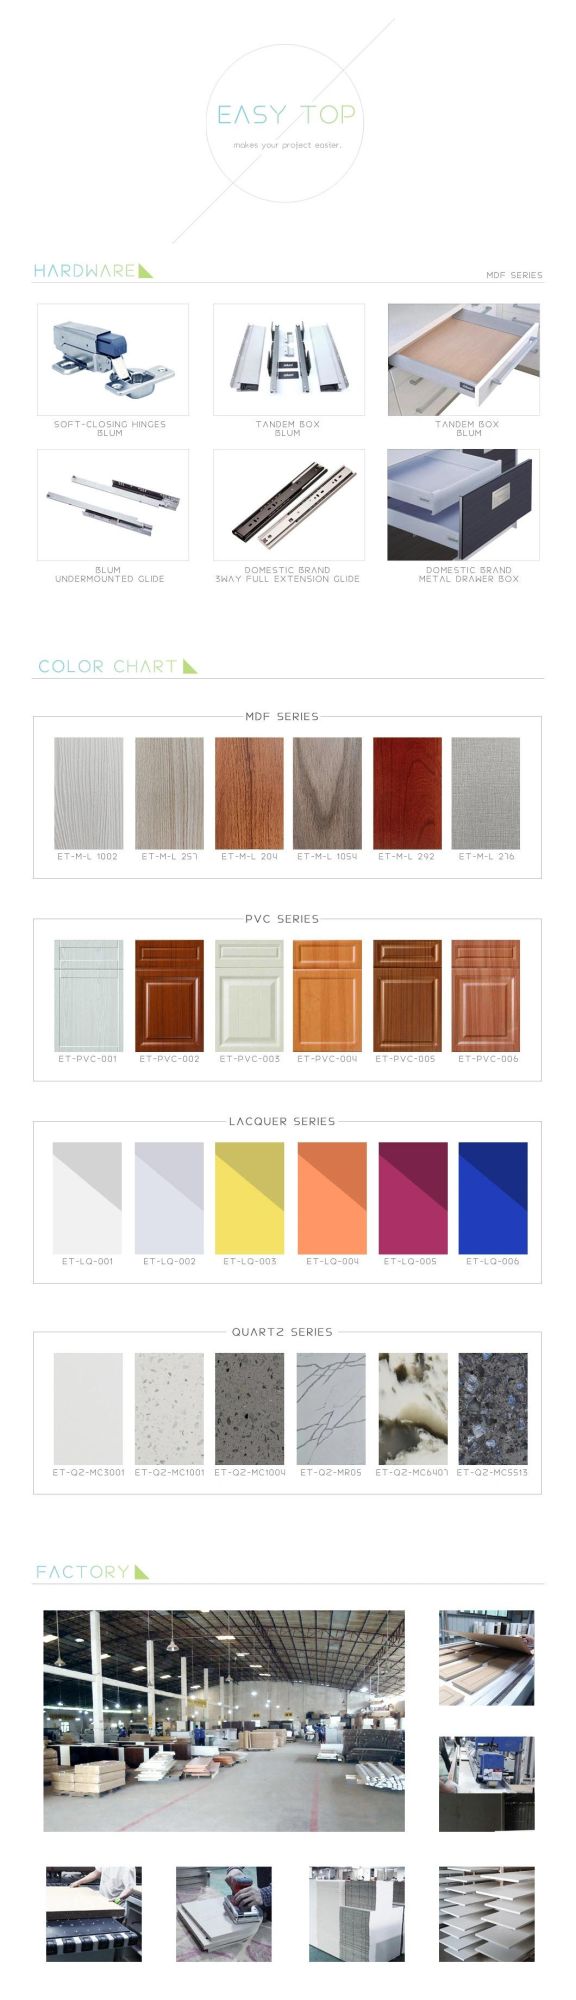 Kitchen Cupboard PVC Plastic Laminate Door Surface Treatment Home Storage Cabinets